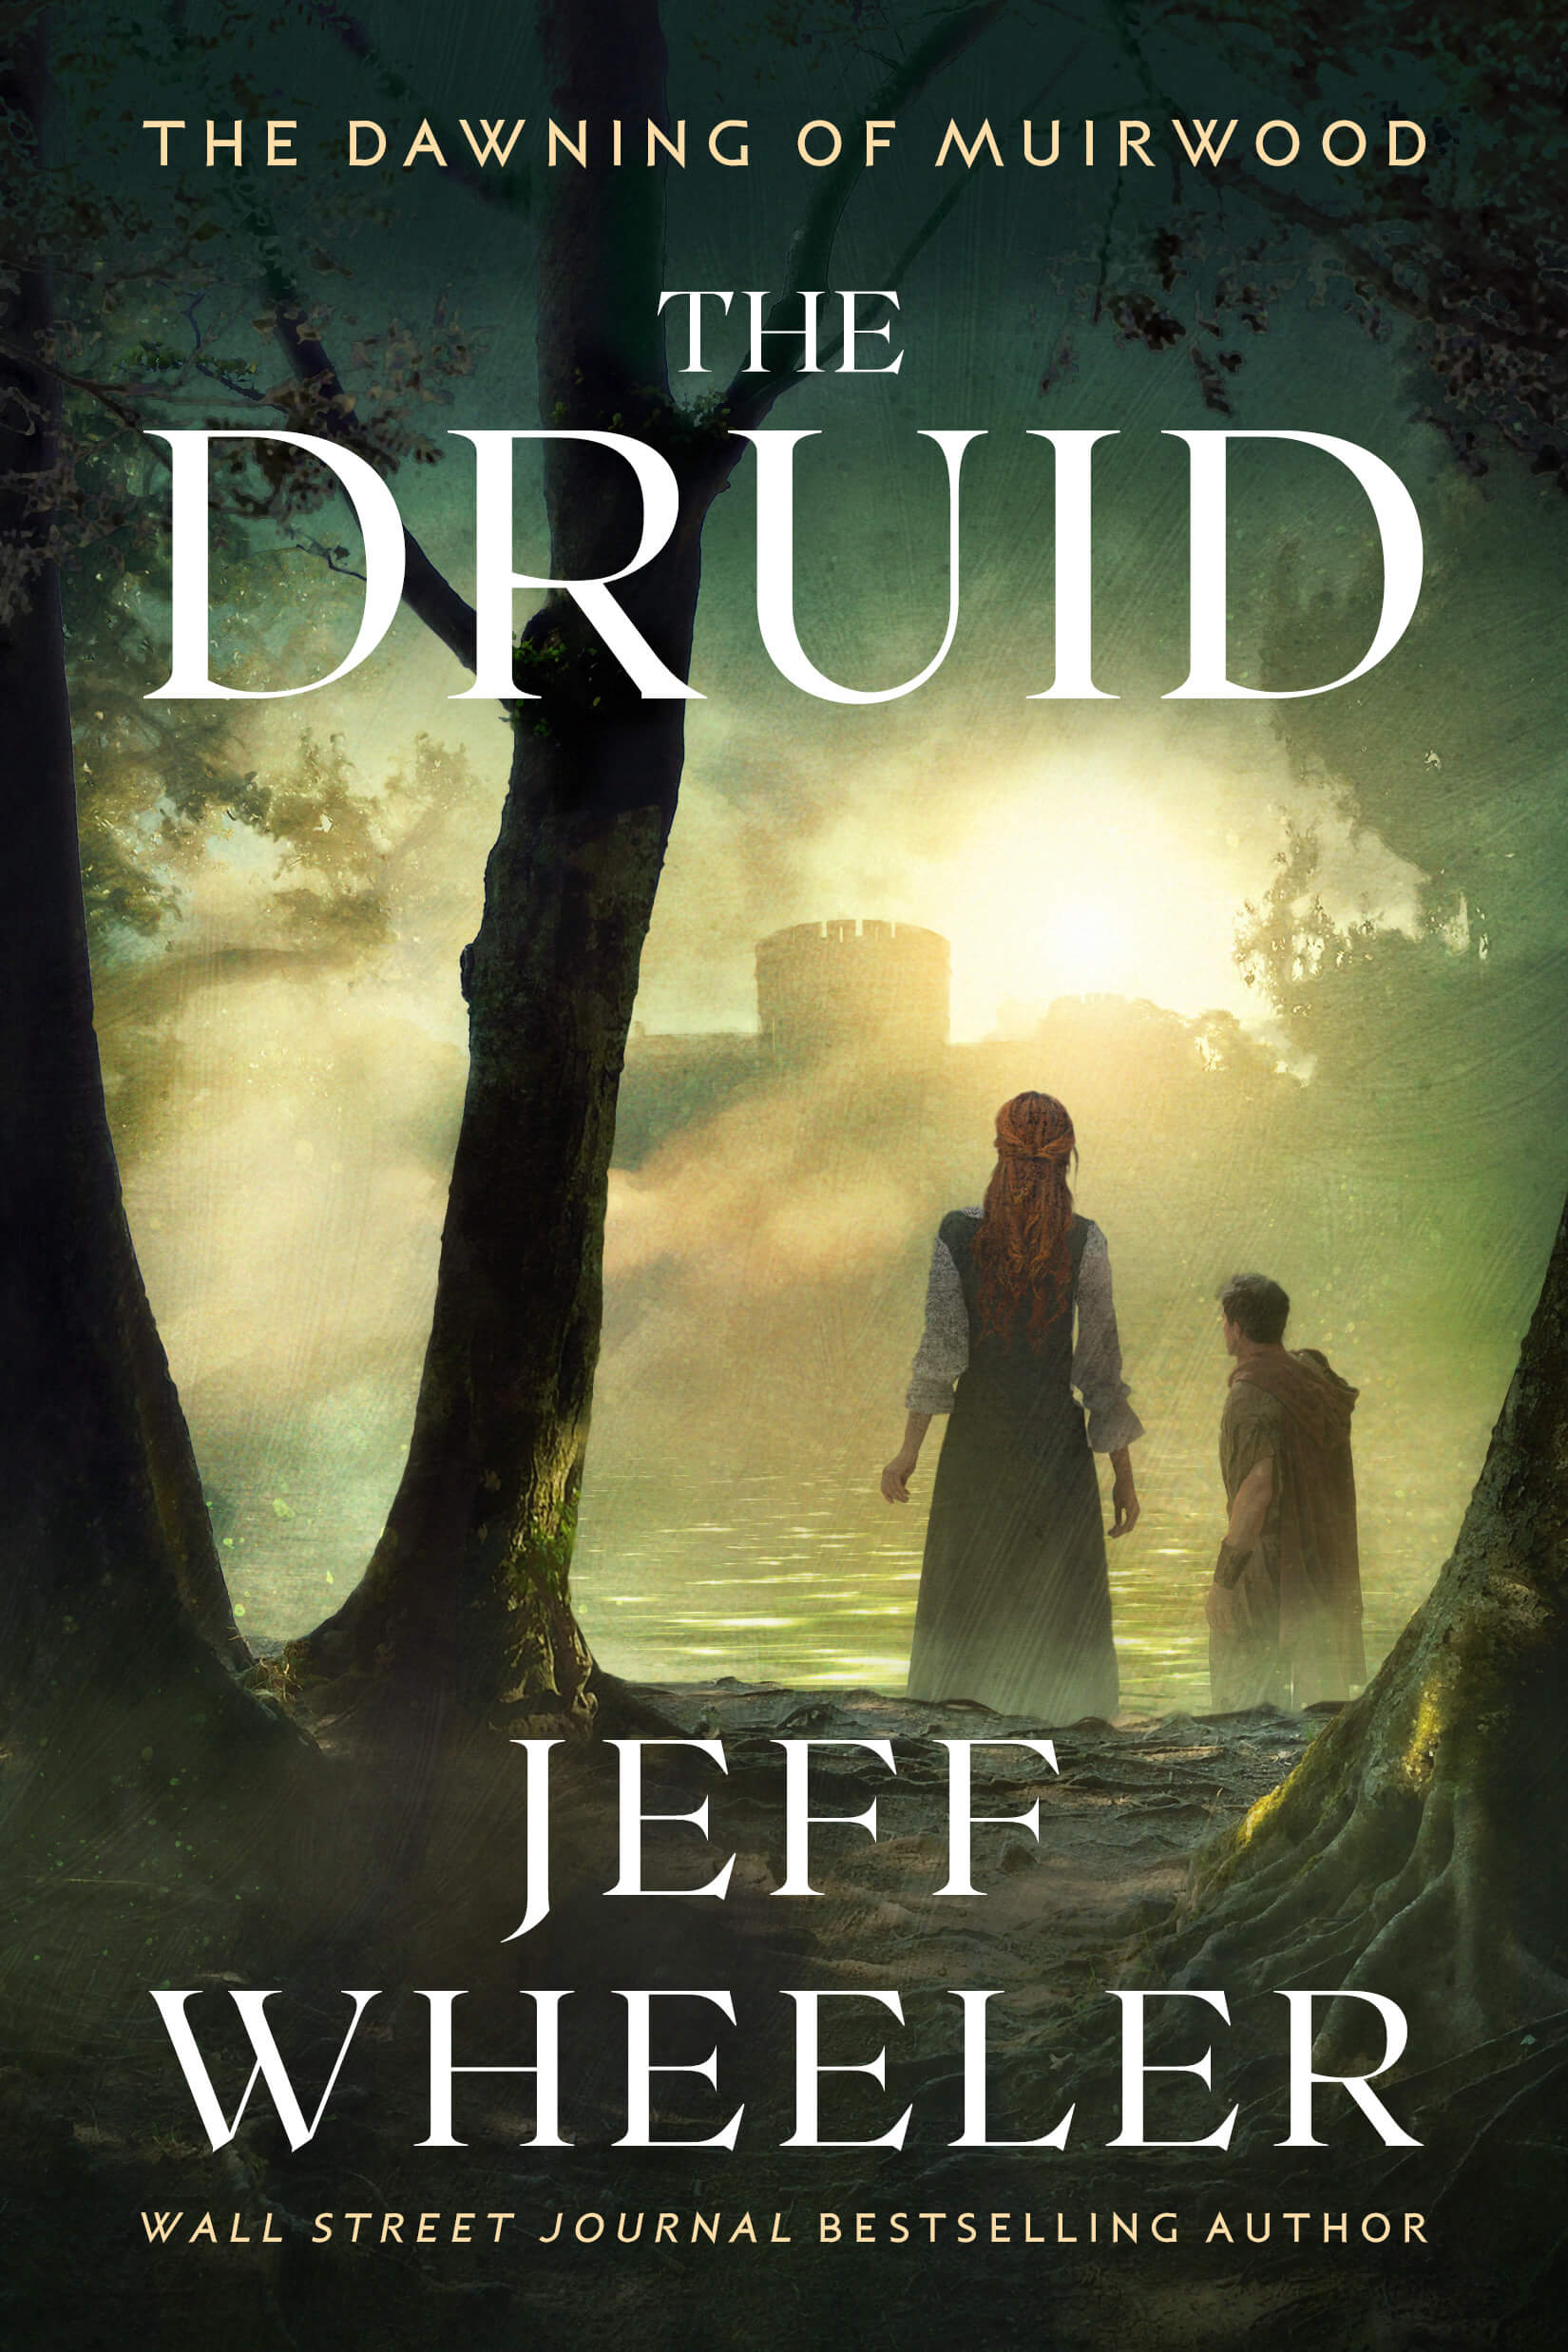 The Druid - The Dawning of Muirwood - Jeff Wheeler